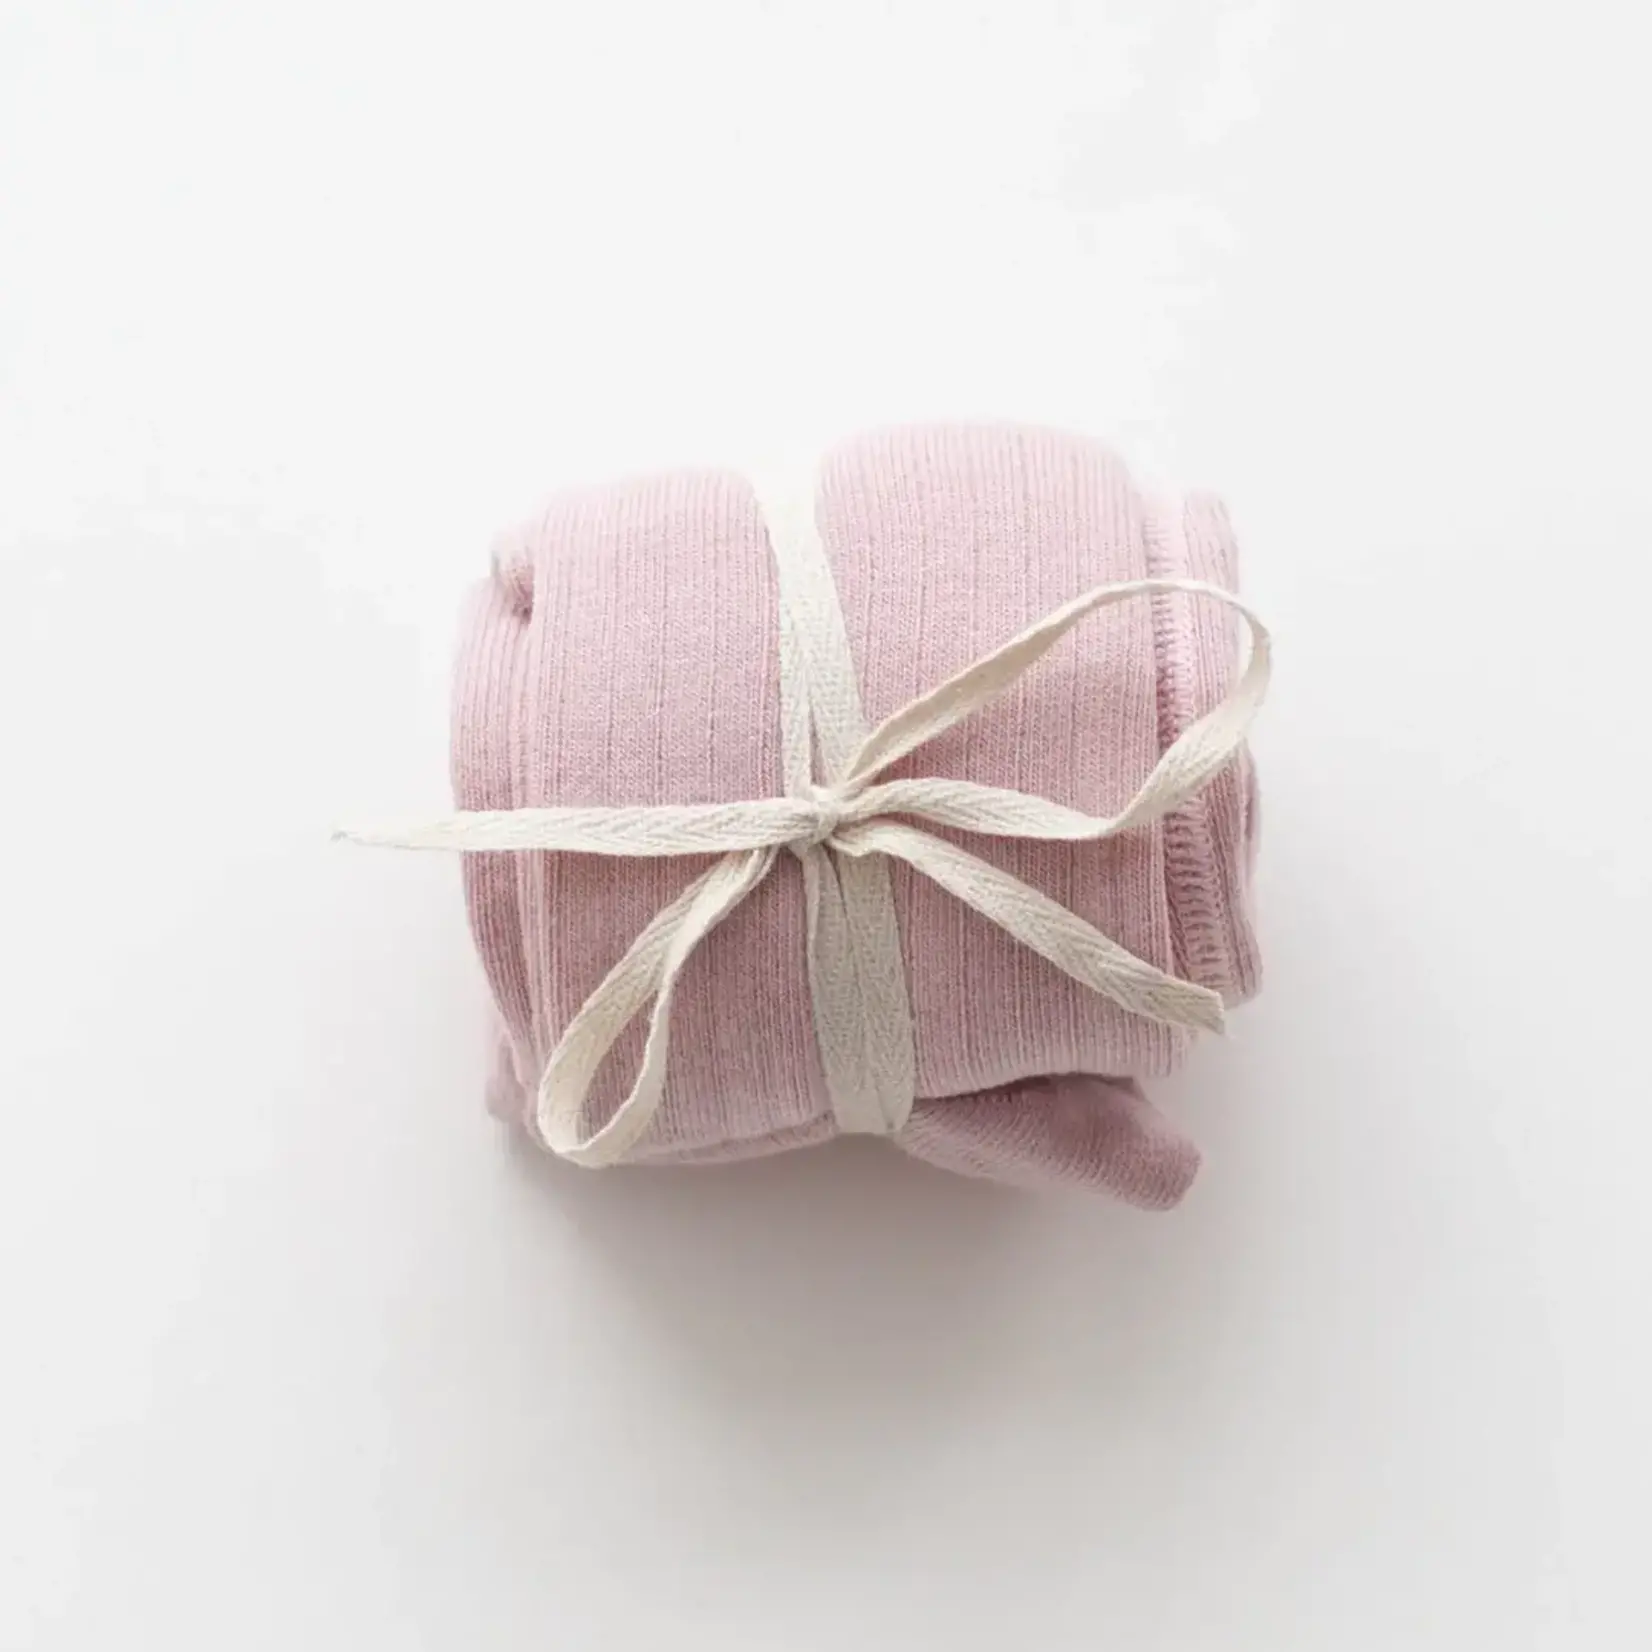 Lali Cotton Tights - Pink - 8Y